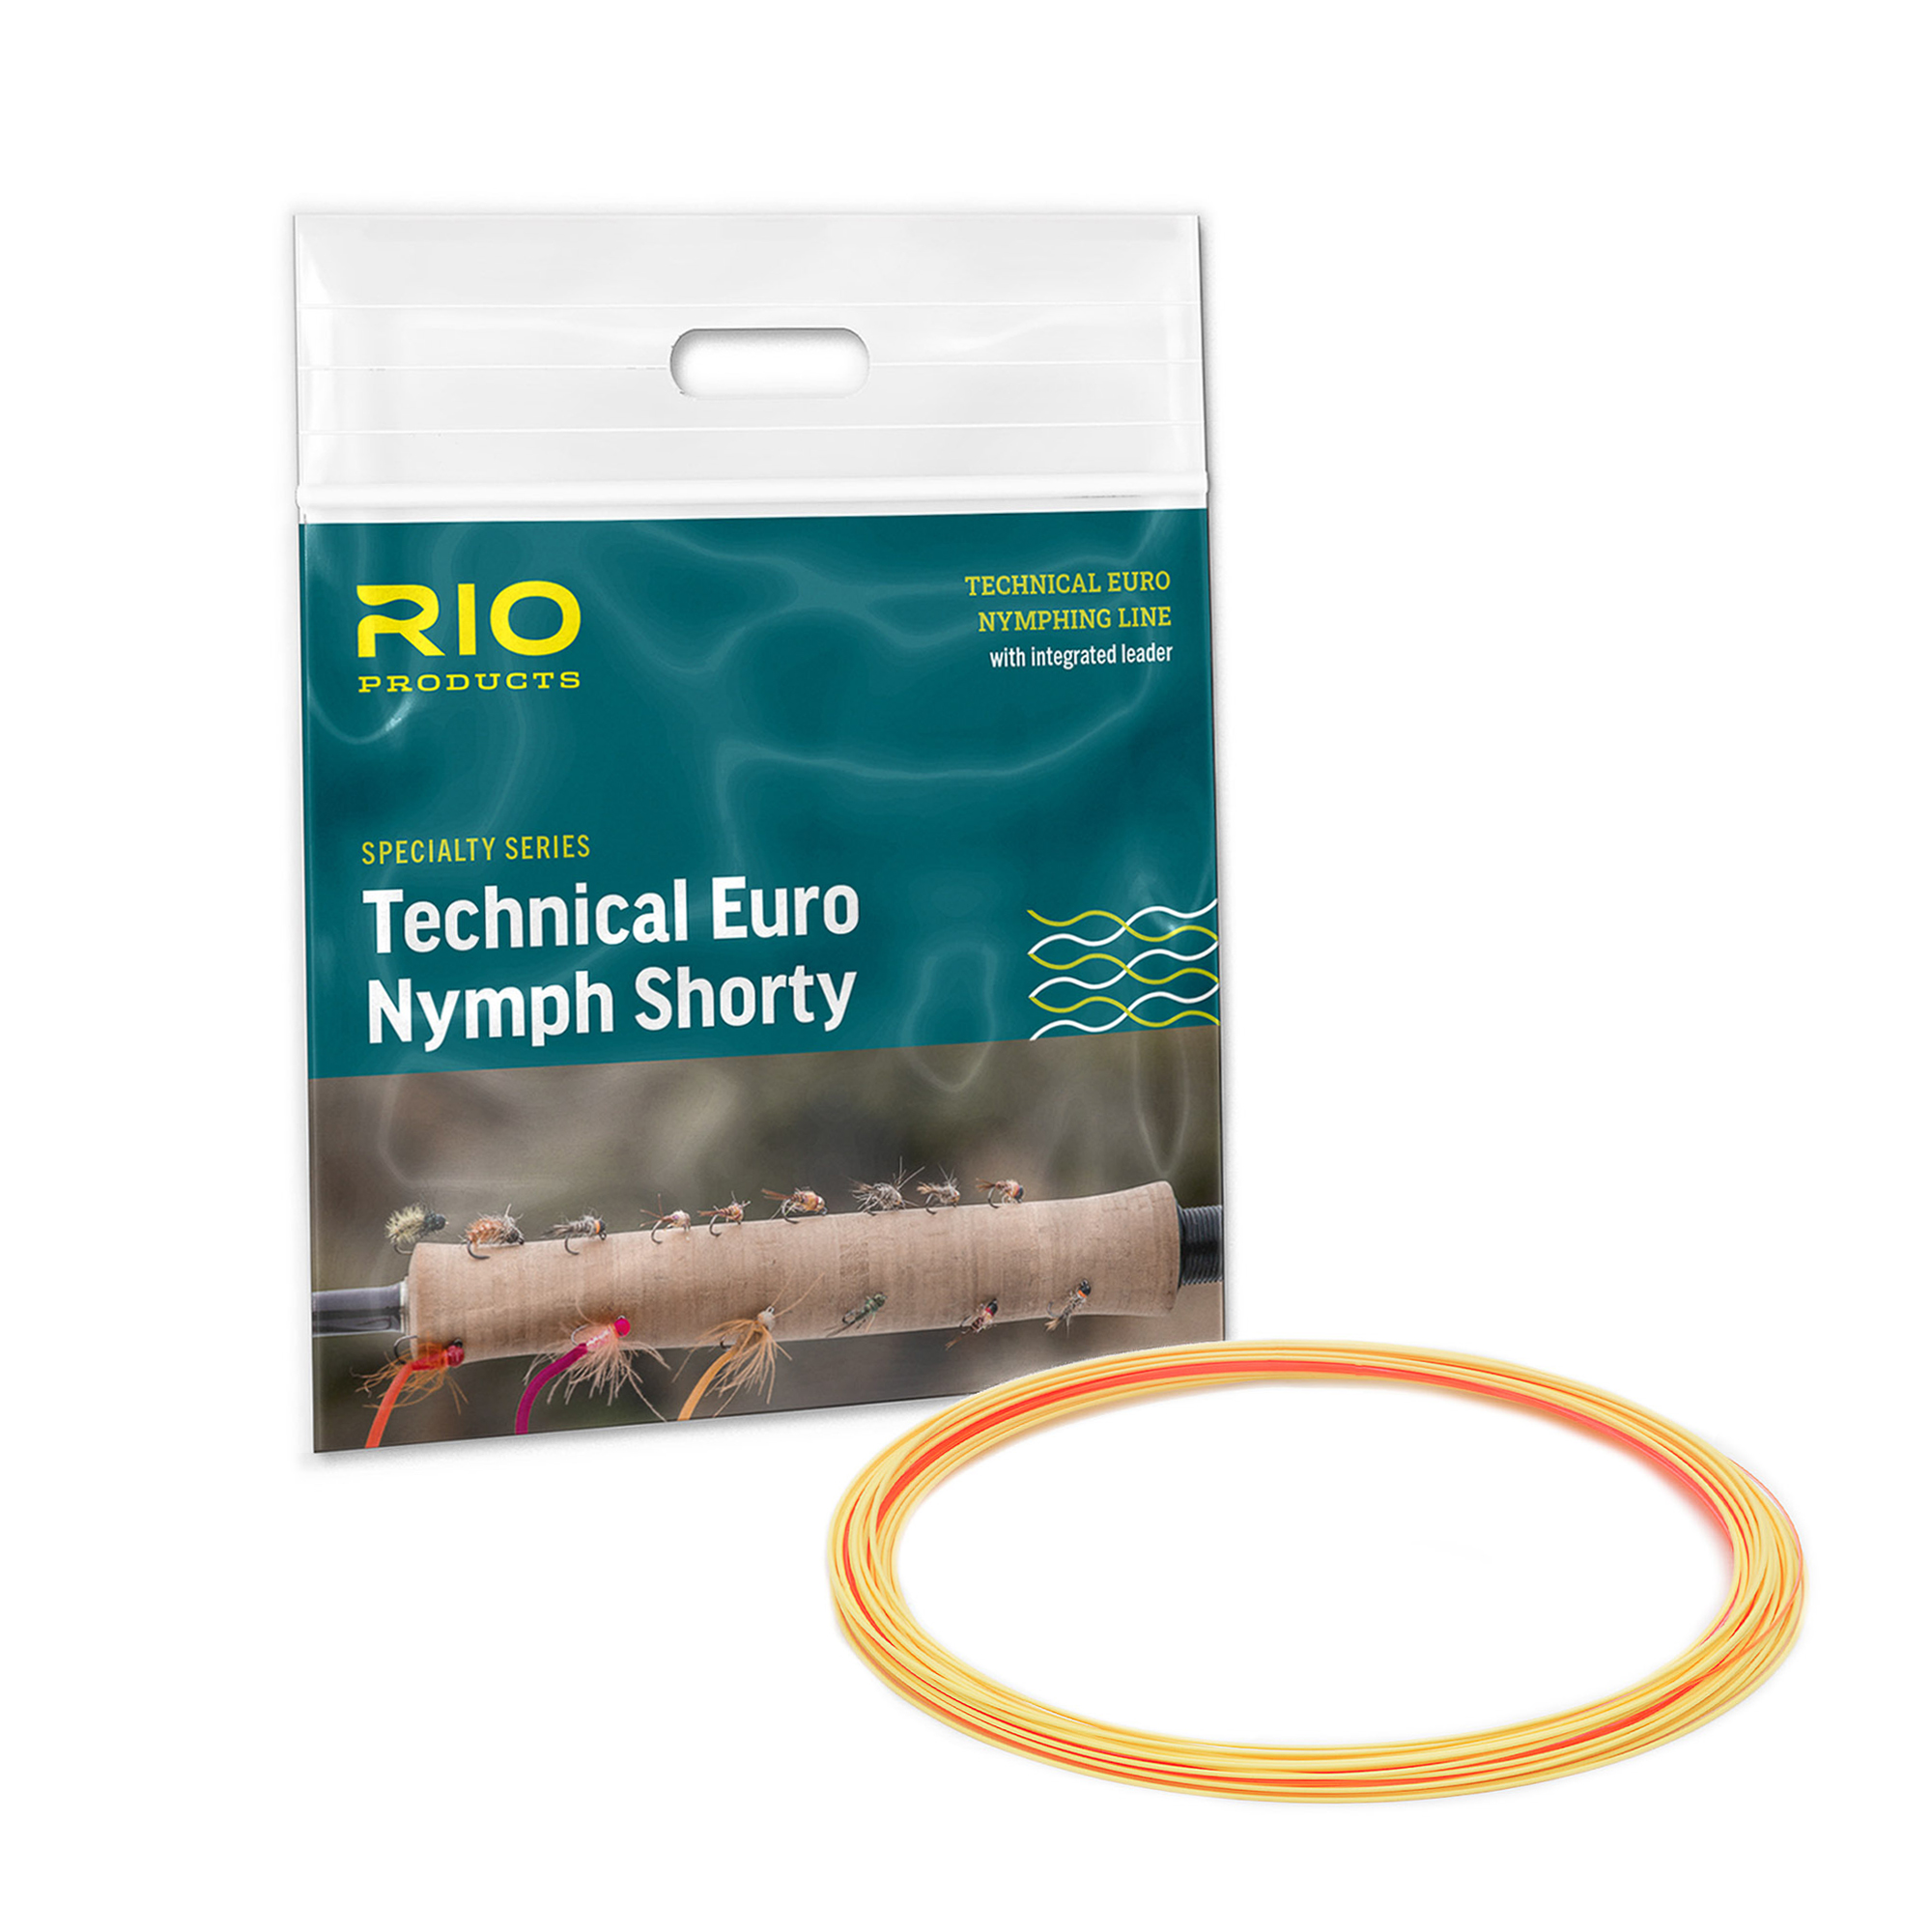 RIO Technical Euro Nymph Shorty Line – Guide Flyfishing